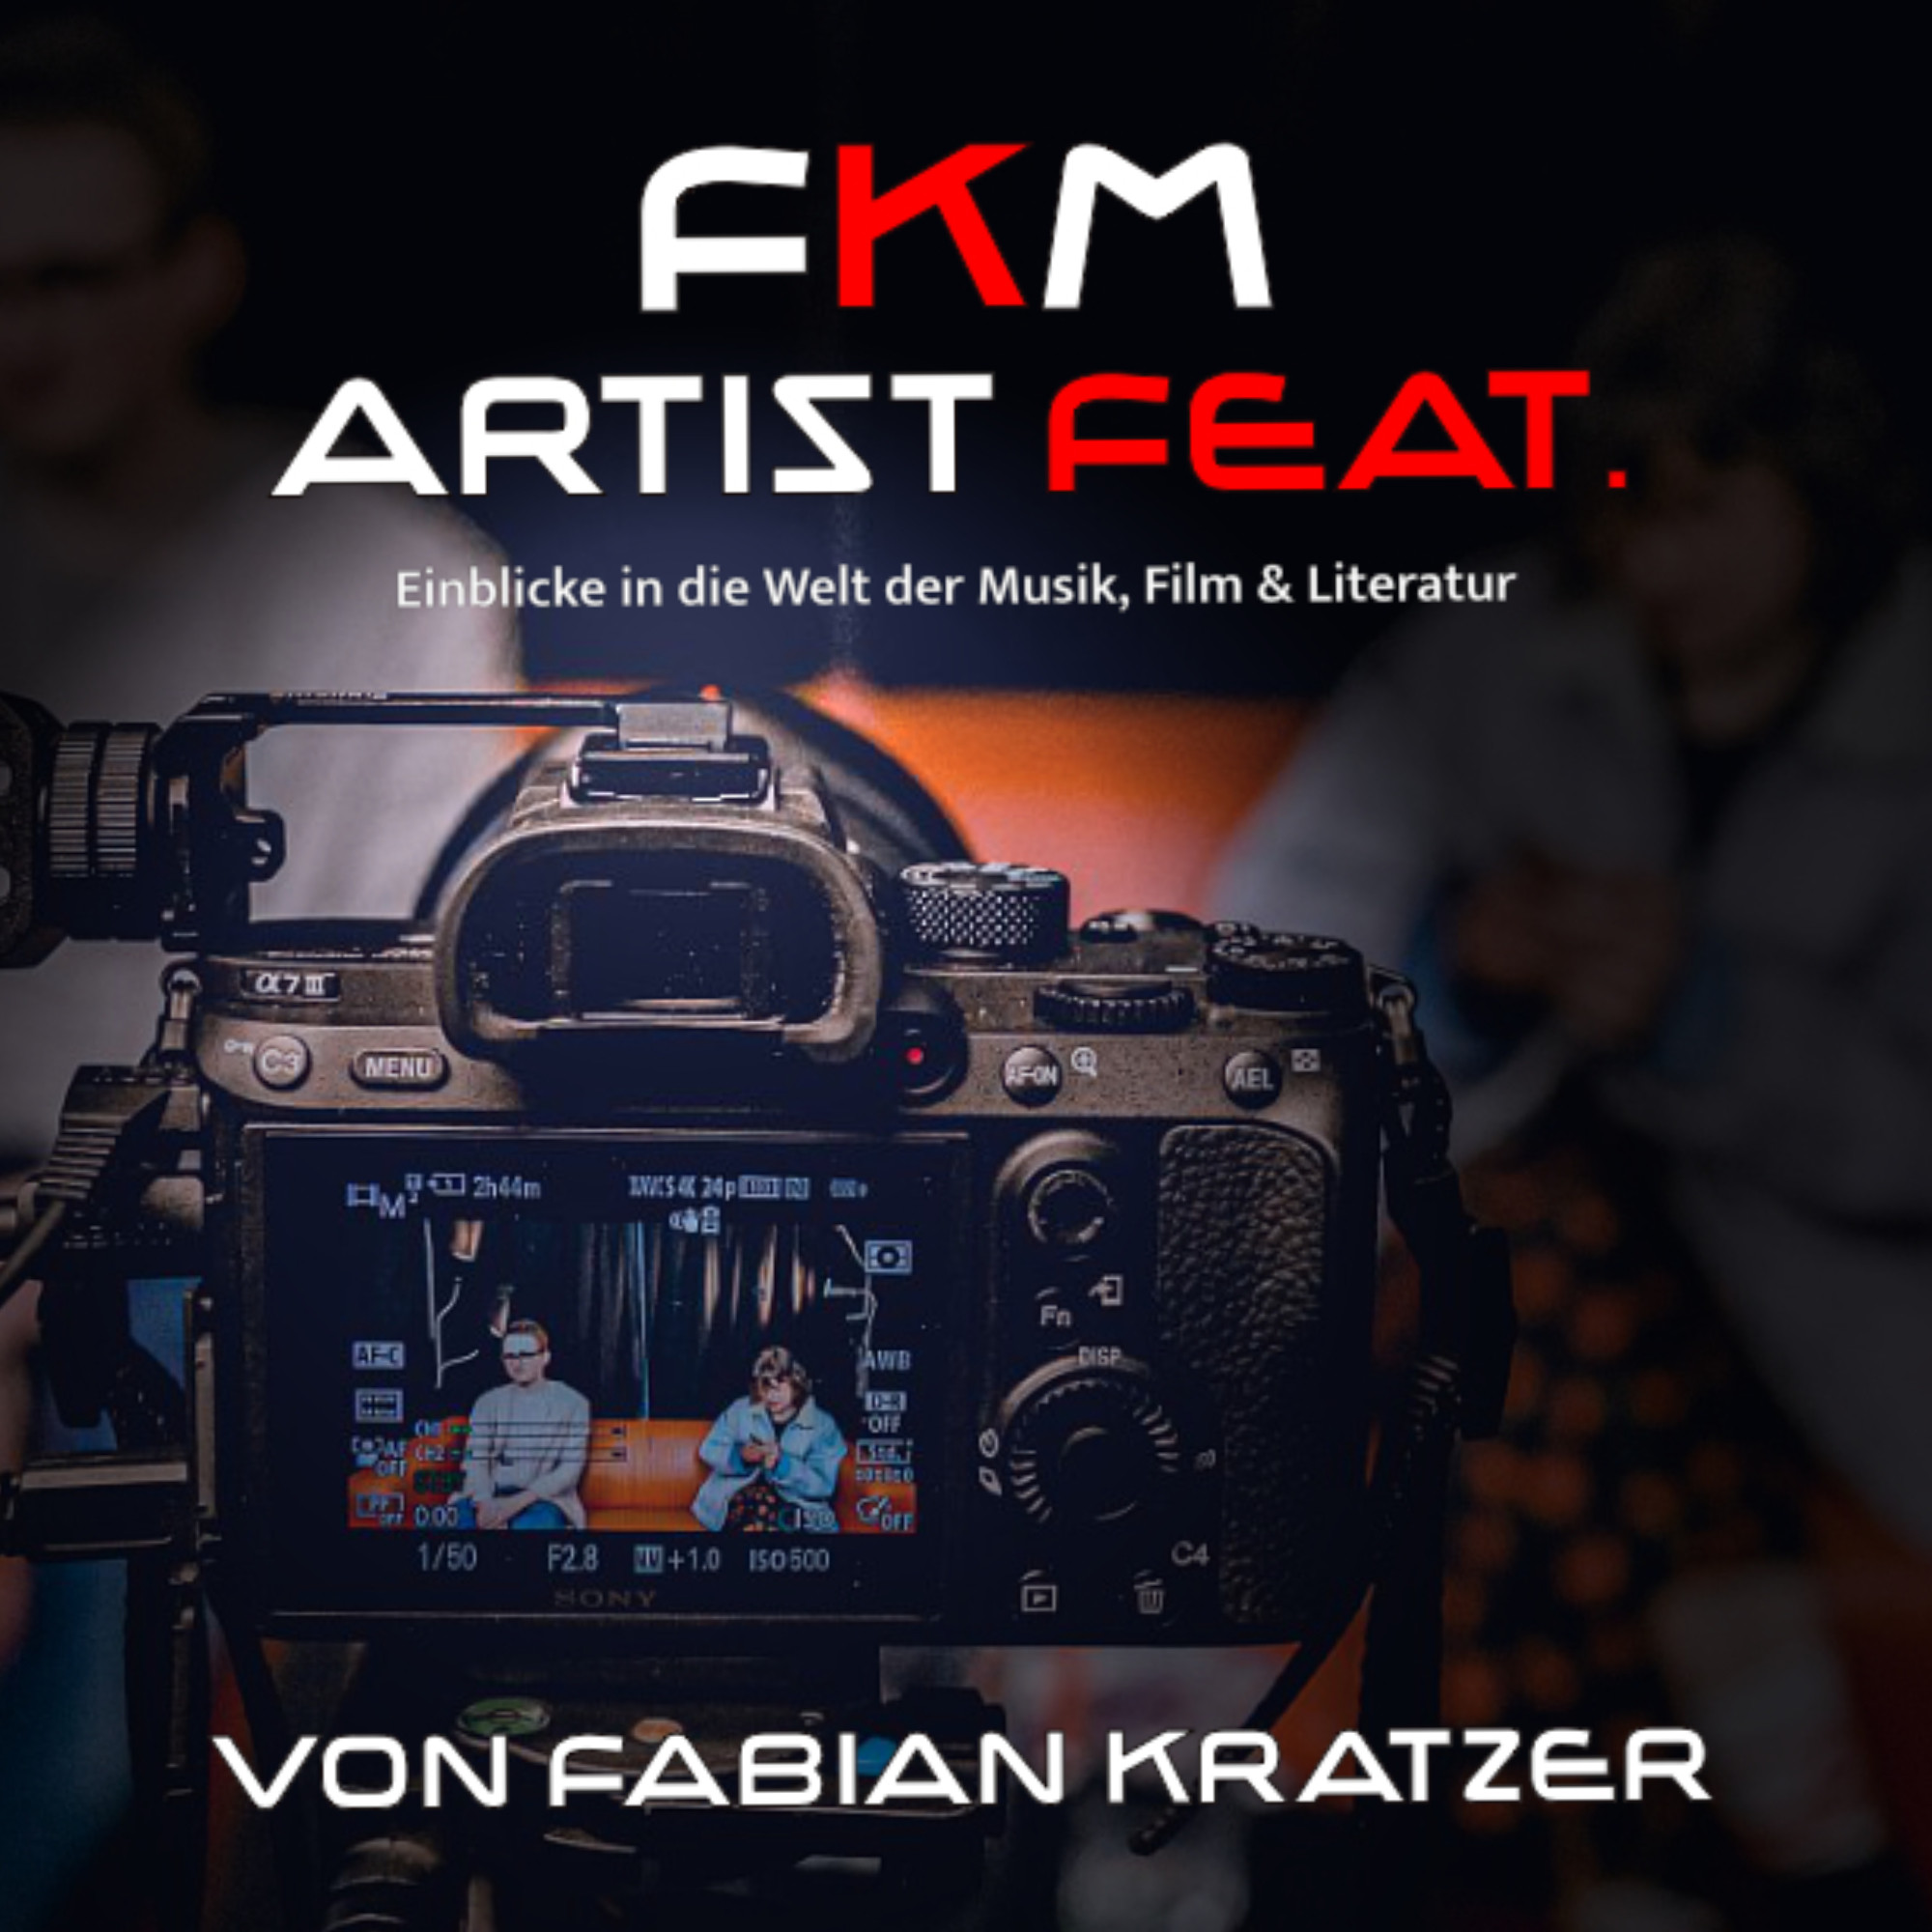 FKM Artist Feat. Podcast